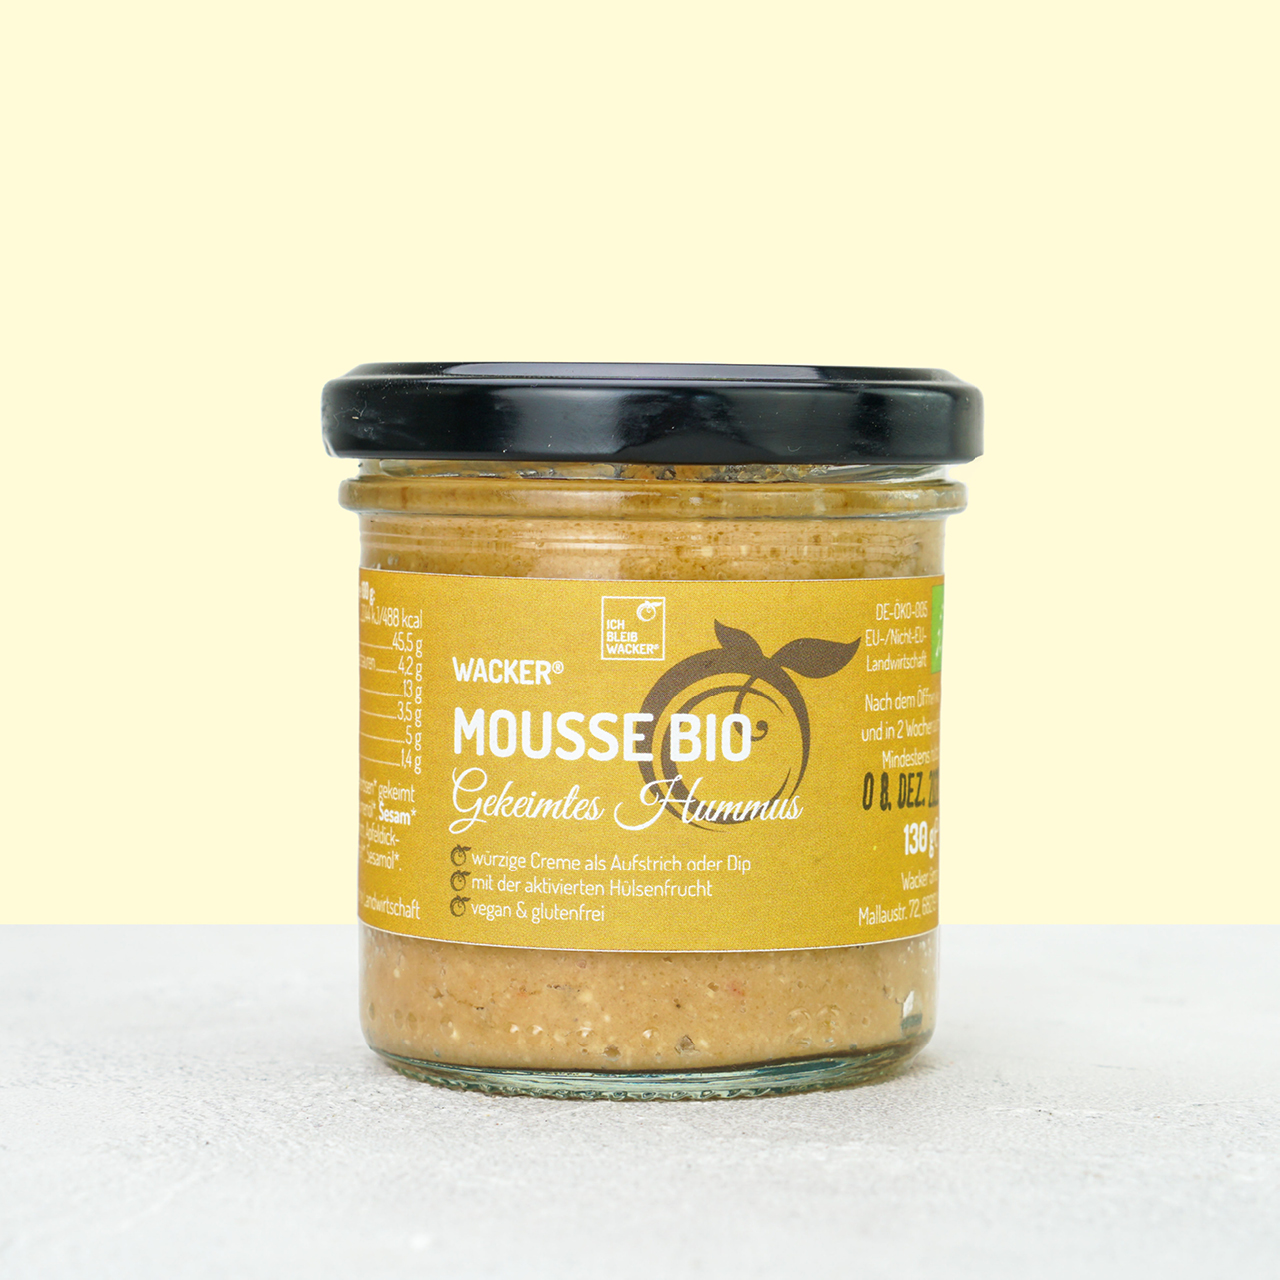 Wacker Mousse Gekeimtes Hummus Bio, 130g